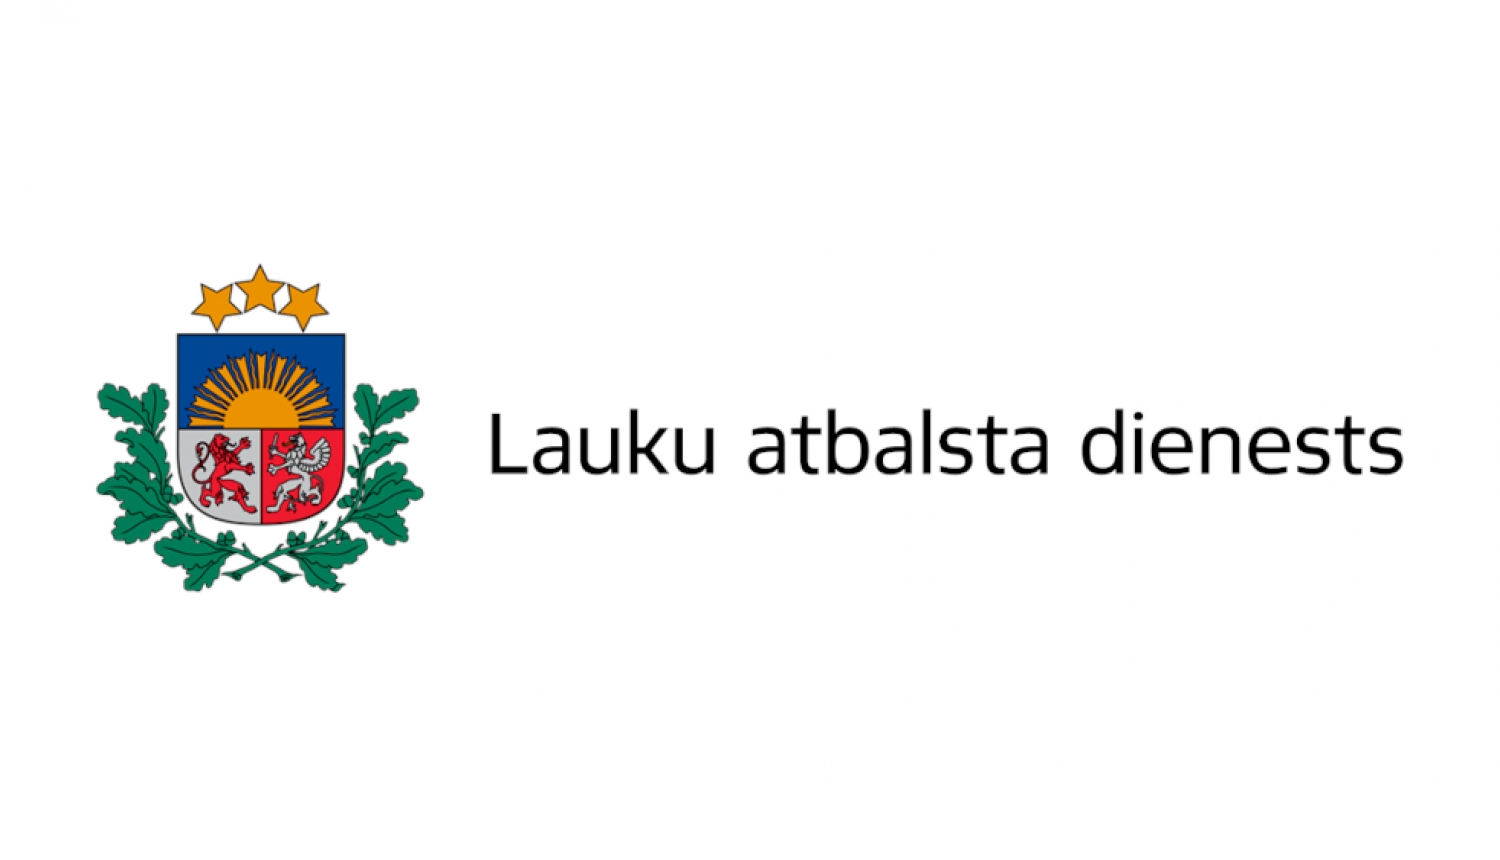 Lauku atbalsta dienesta logo